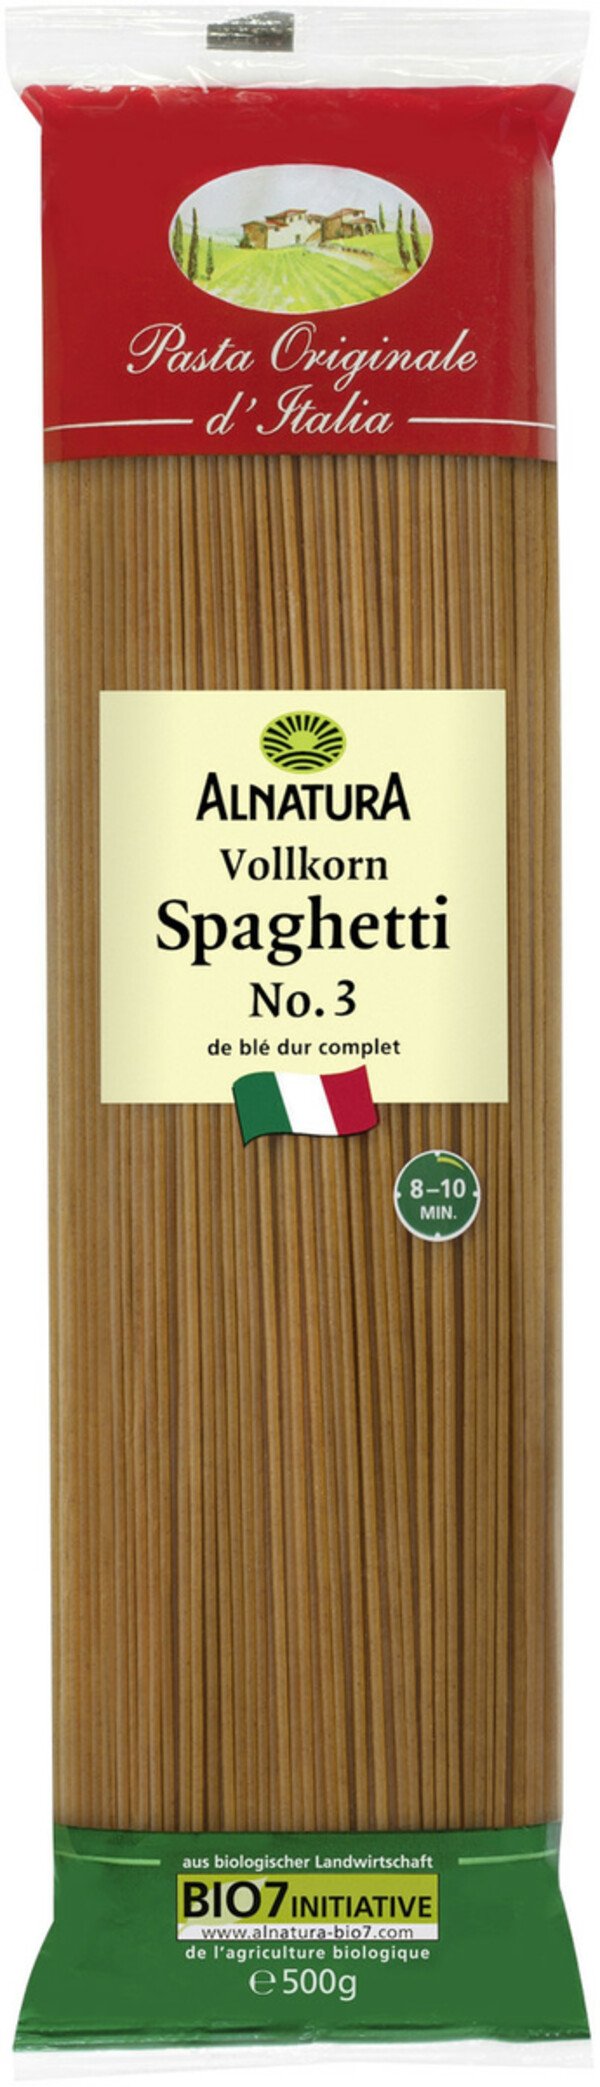 Bild 1 von Alnatura Bio Vollkorn Spaghetti No.3 500G